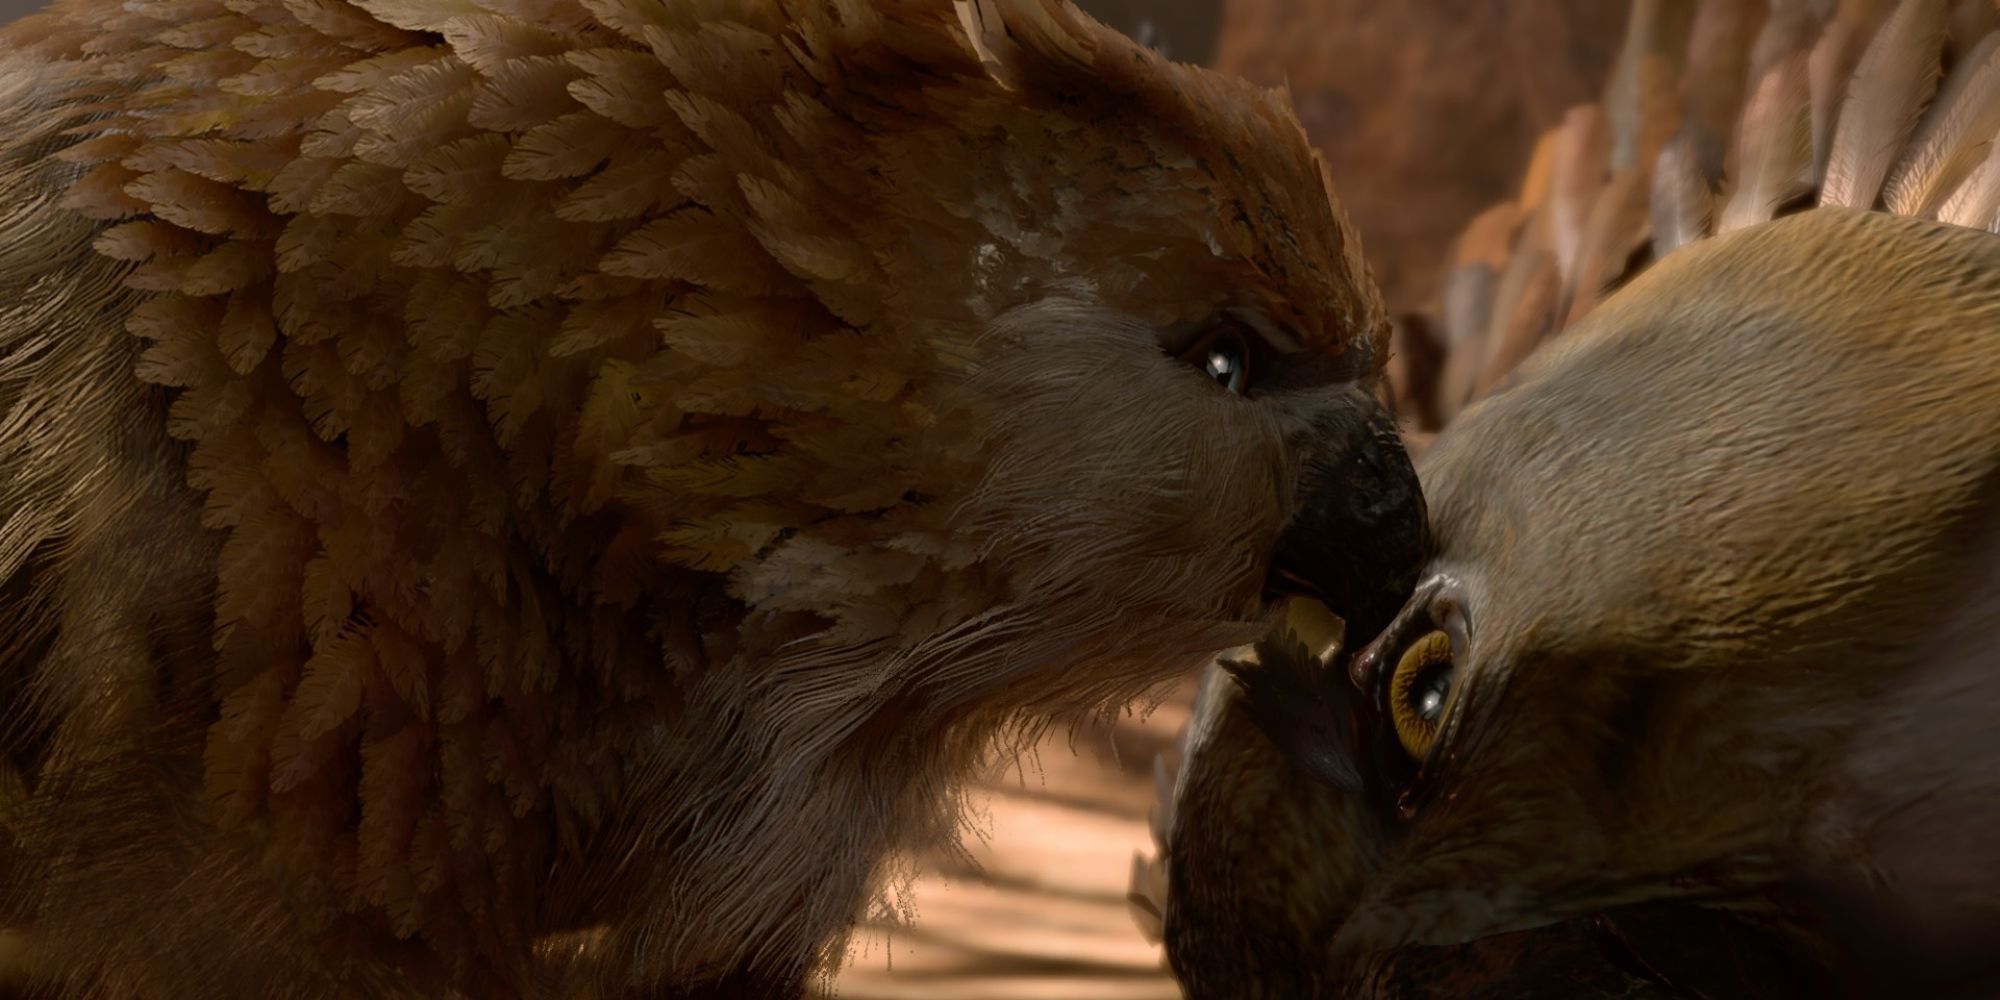 The Owlbear eating its mother in Baldur's Gate 3